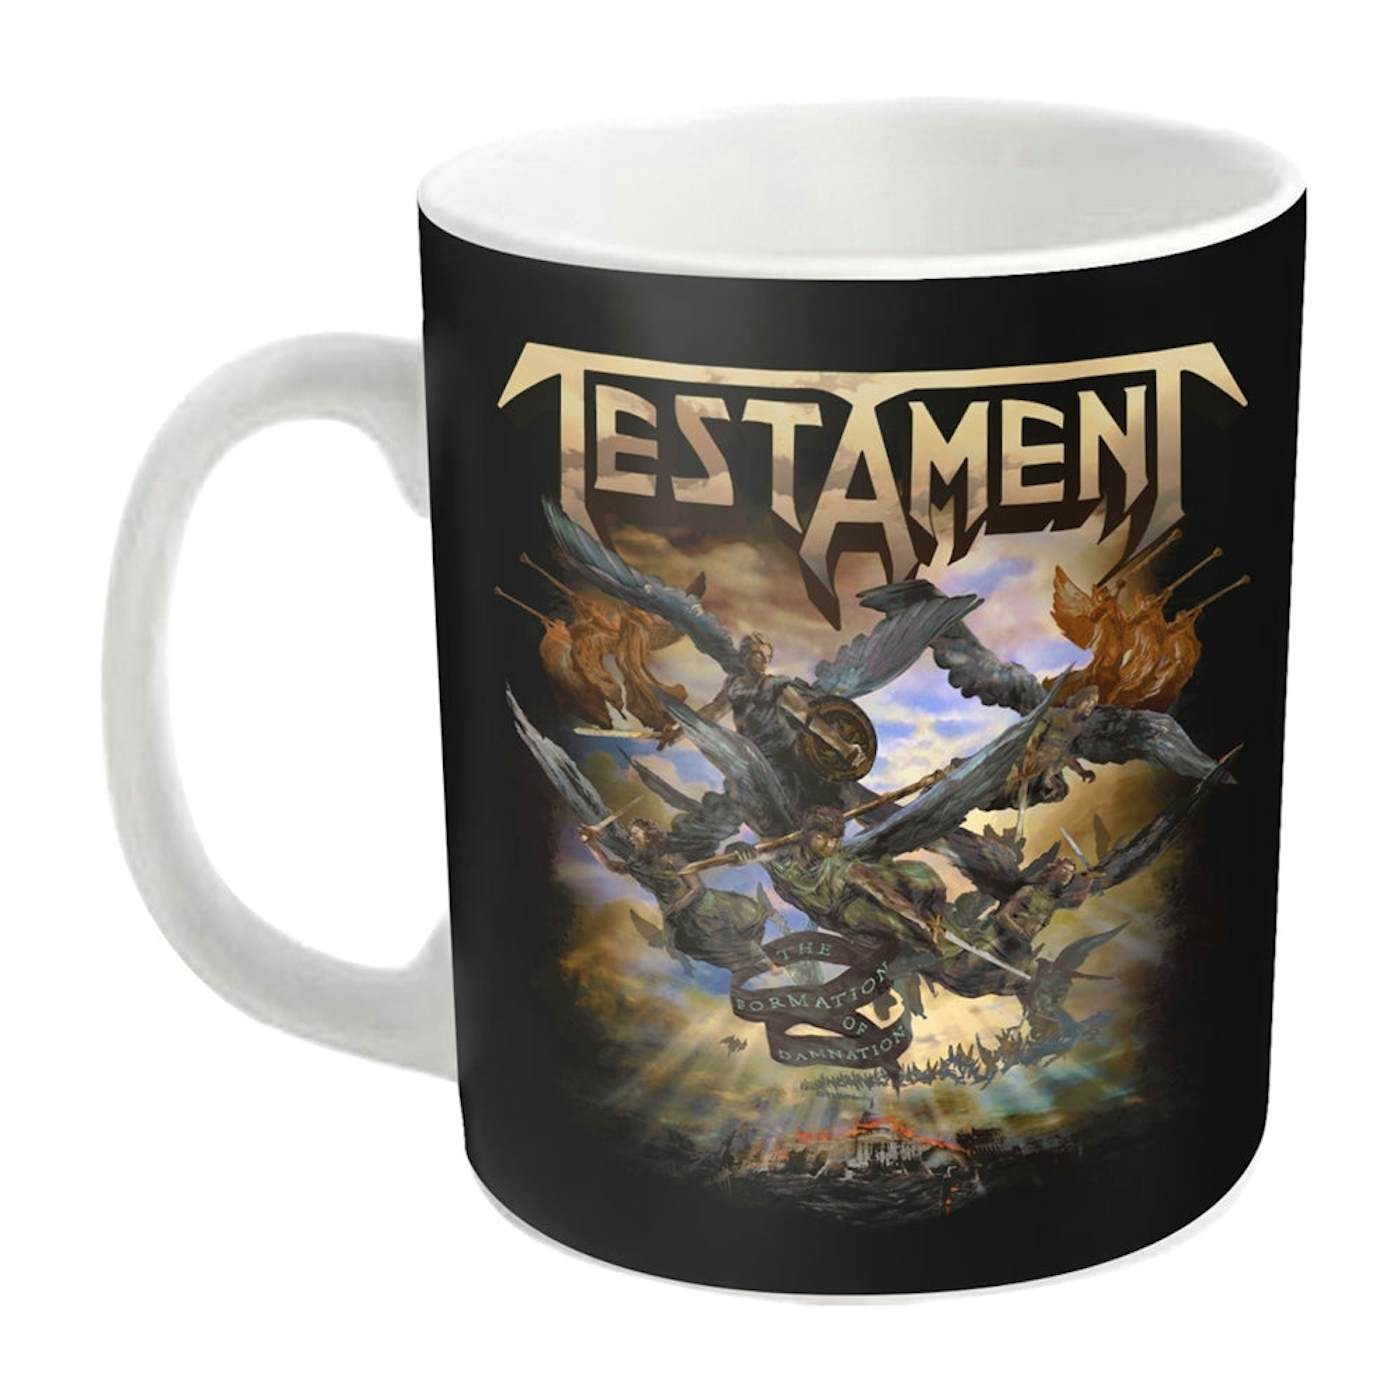 Testament Mug - The Formation Of Damnation